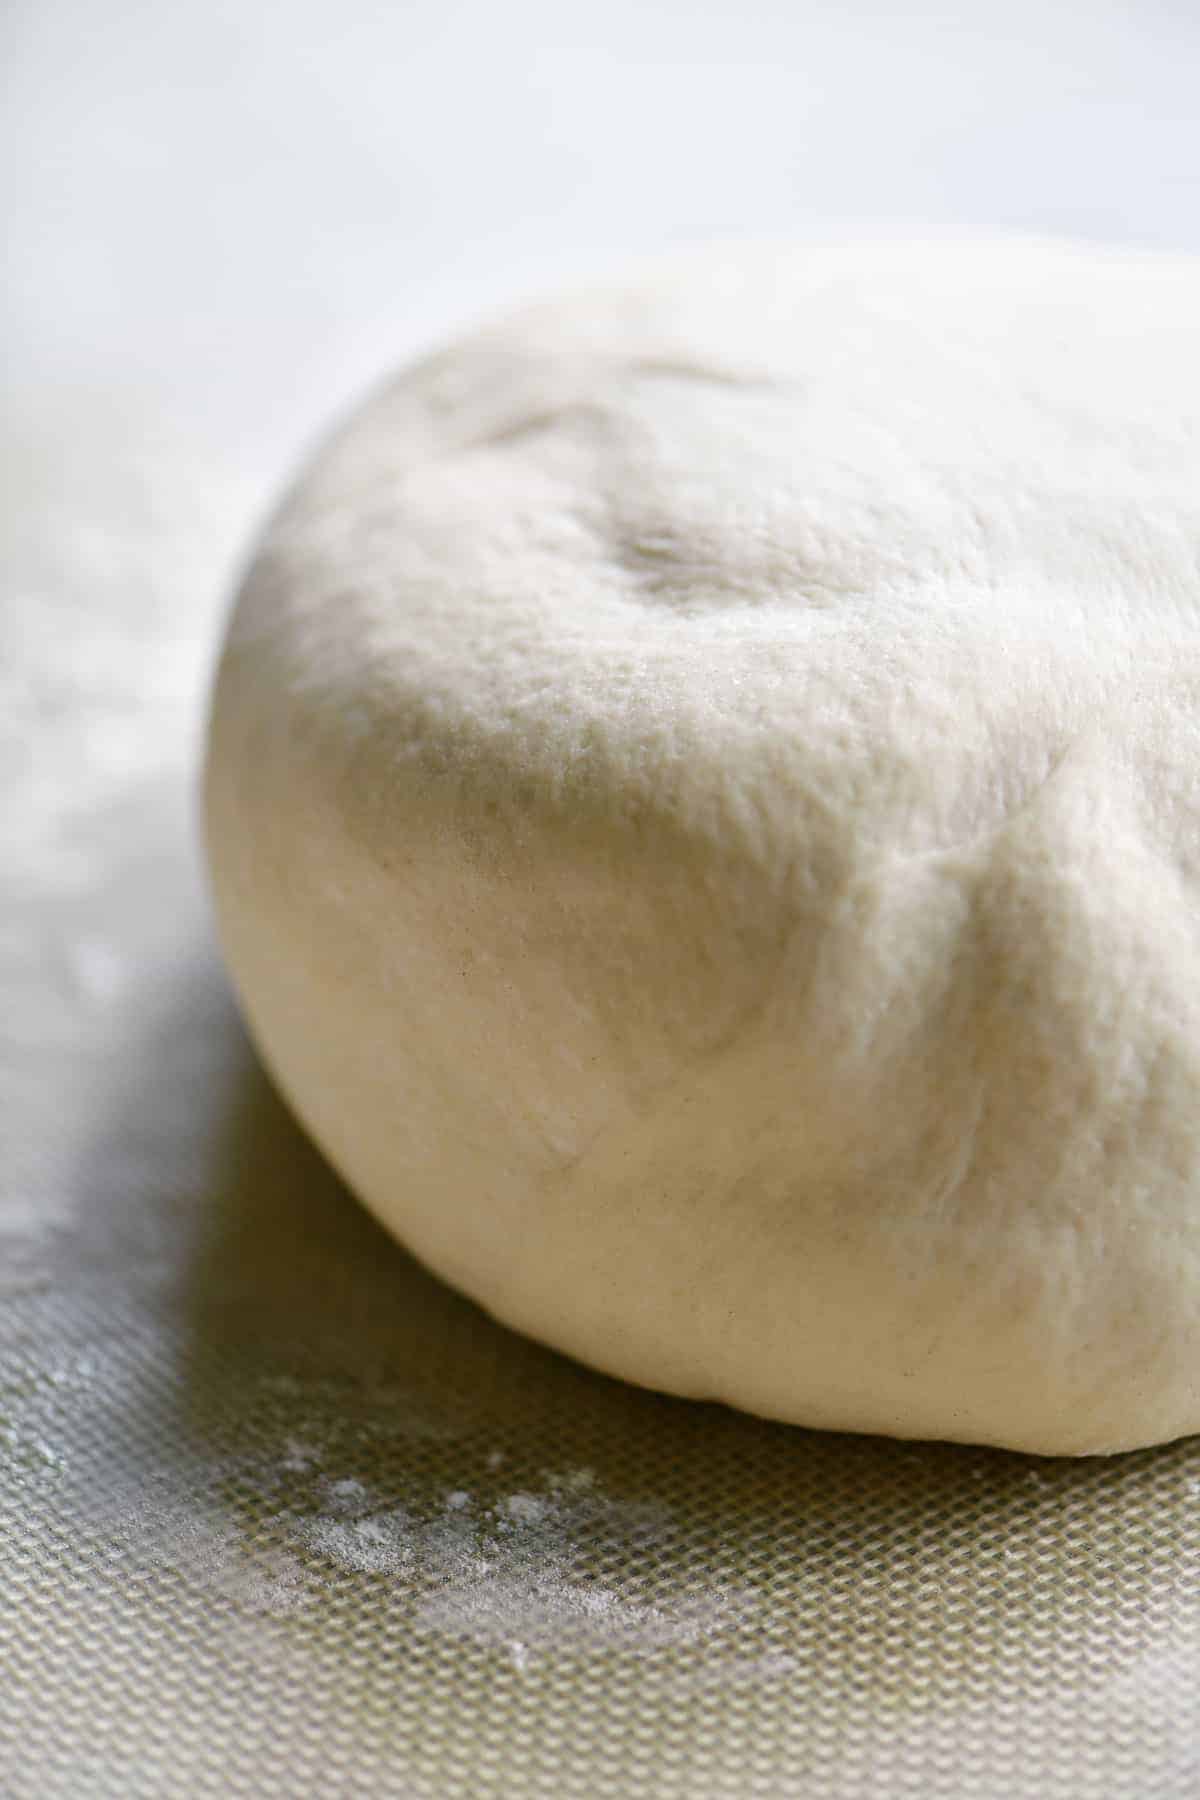 ball of pizza dough